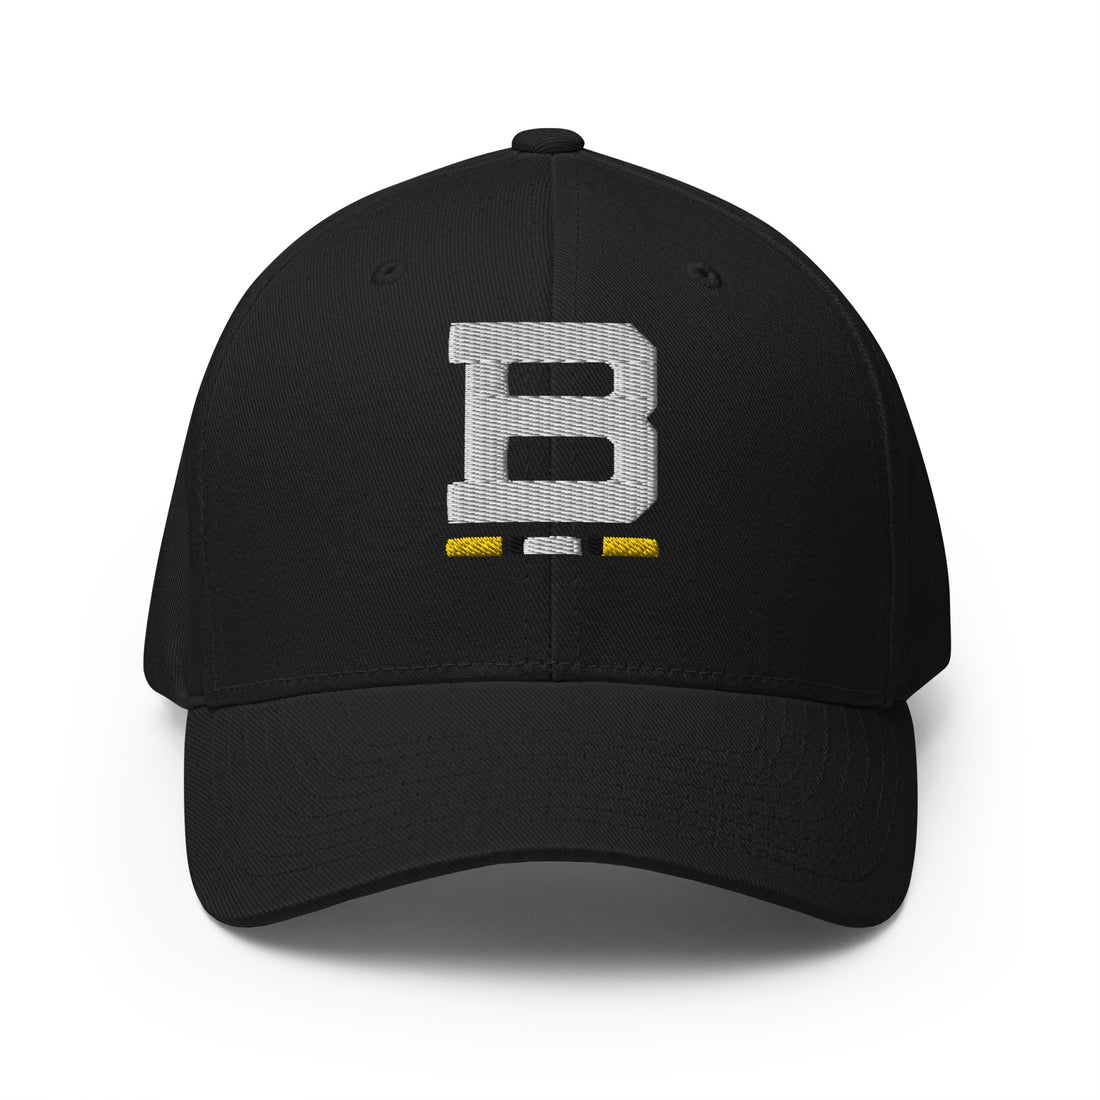 Riiink B Yellow-Black-White – Structured Twill Cap